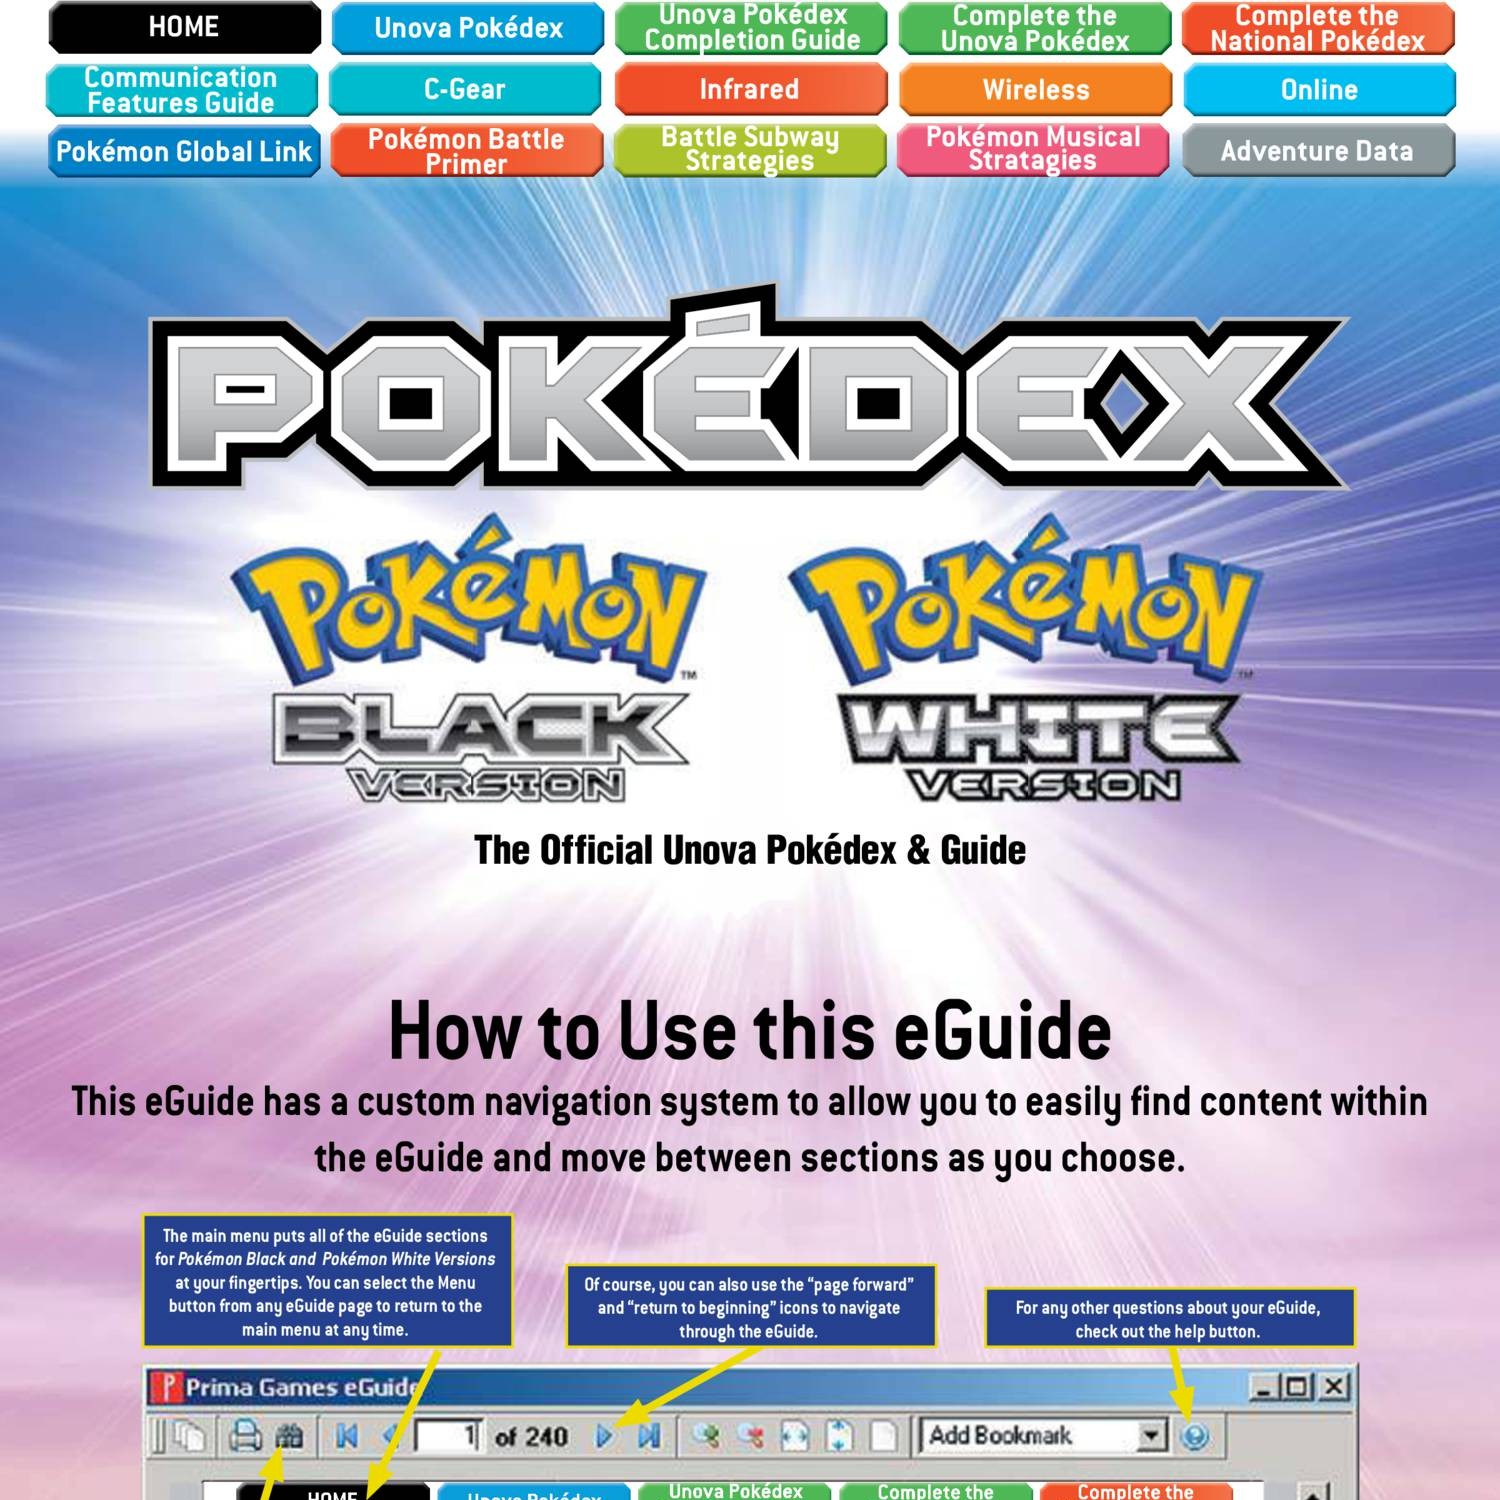 Nintendo Black & White 2 Strategy Guides